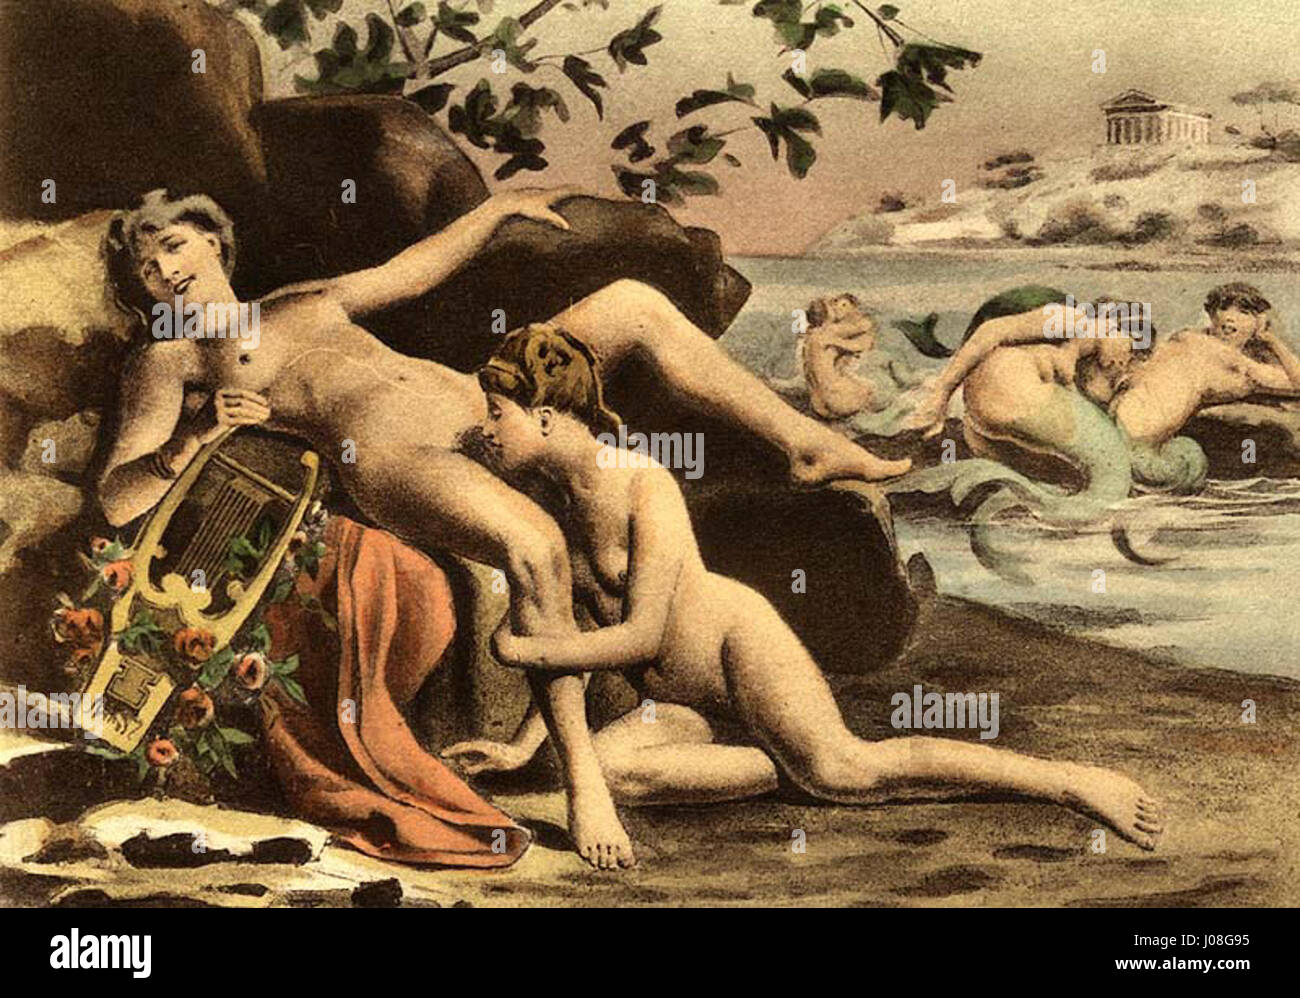 Henri avril erotic painting